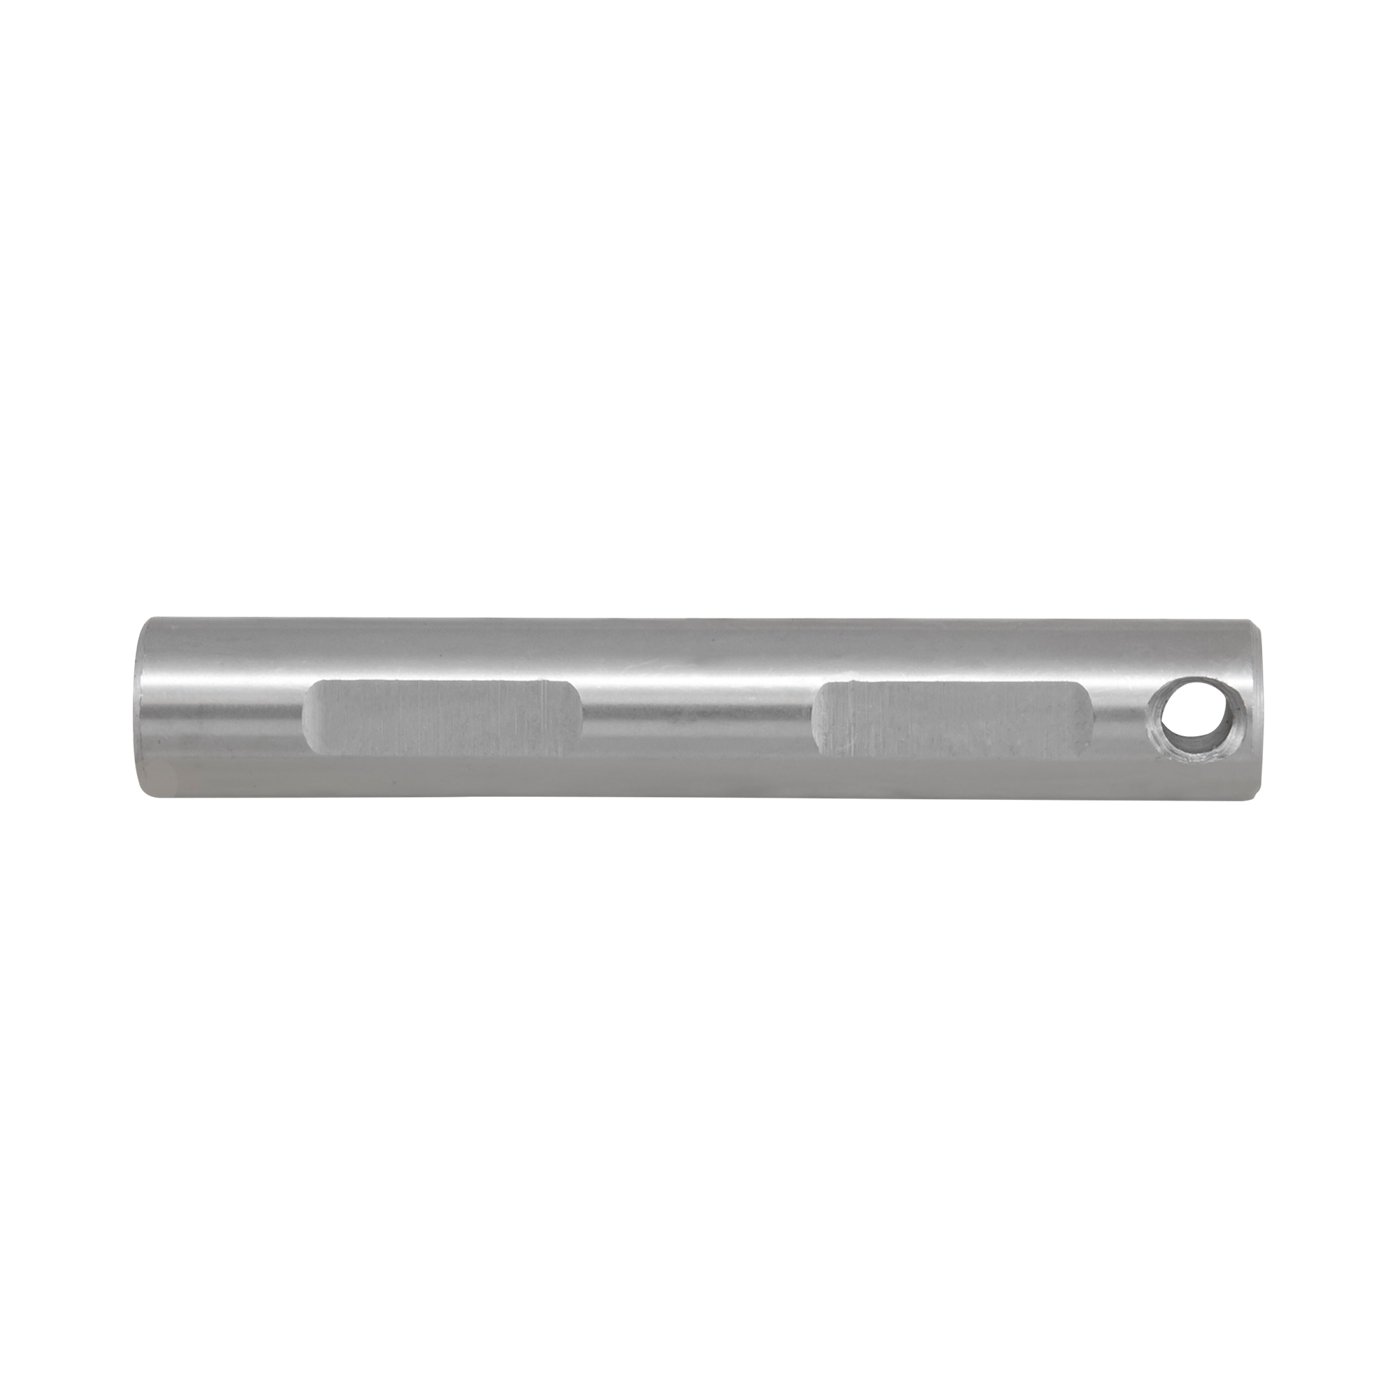 Model 35 Standard Open Cross Pin, Roll Pin Design, 0.685 in. Dia (Not Tracloc).